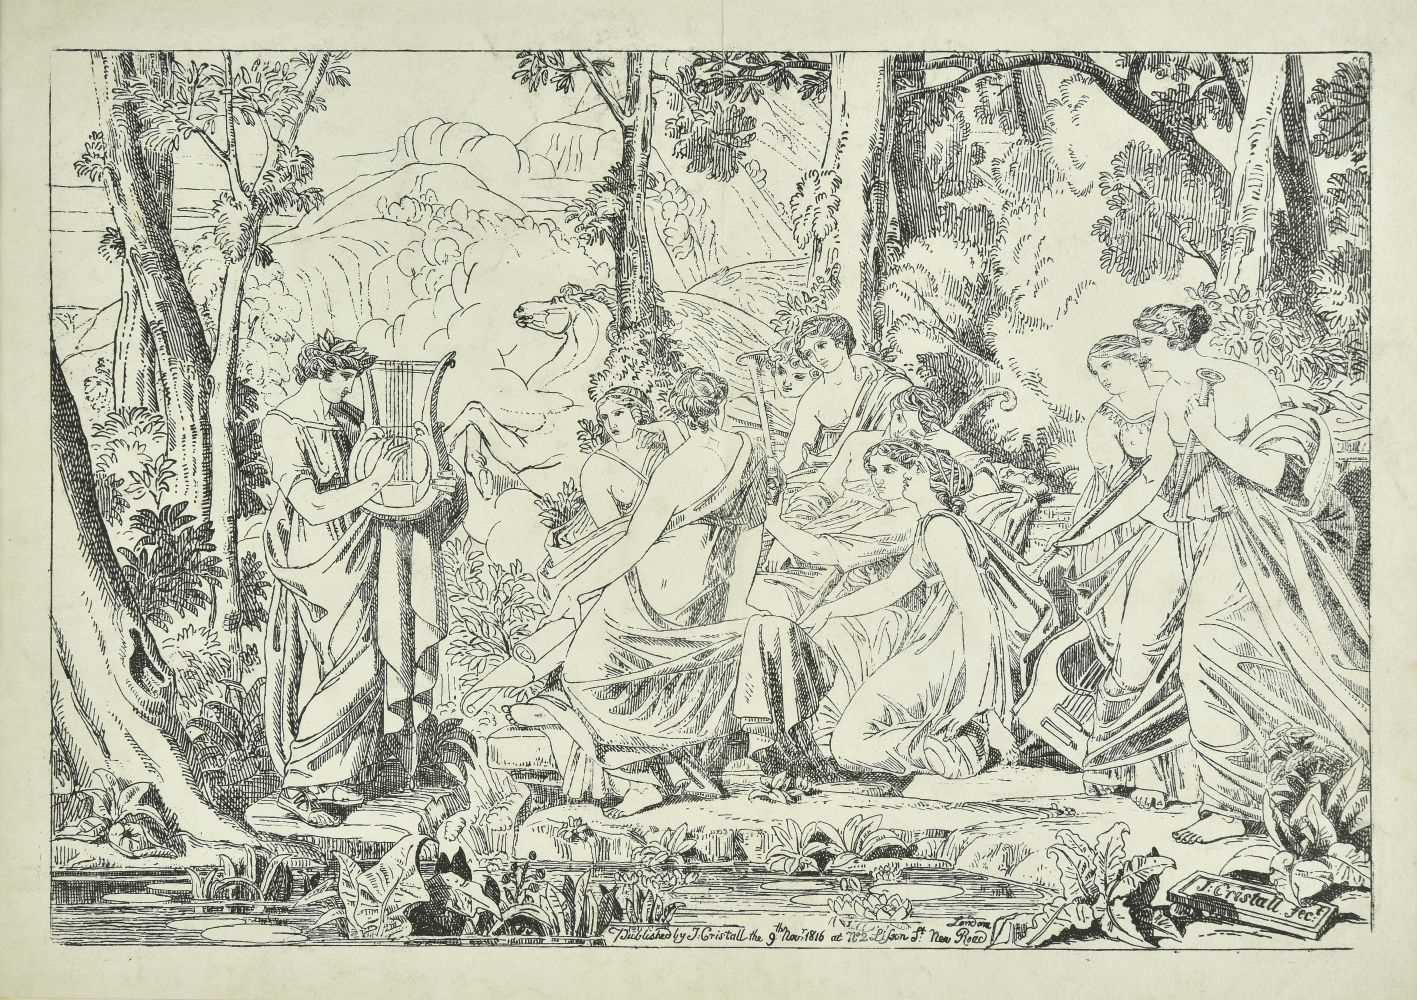 Lot 235 - Cristall (Joshua, 1767-1847). Apollo and the Muses, 1816